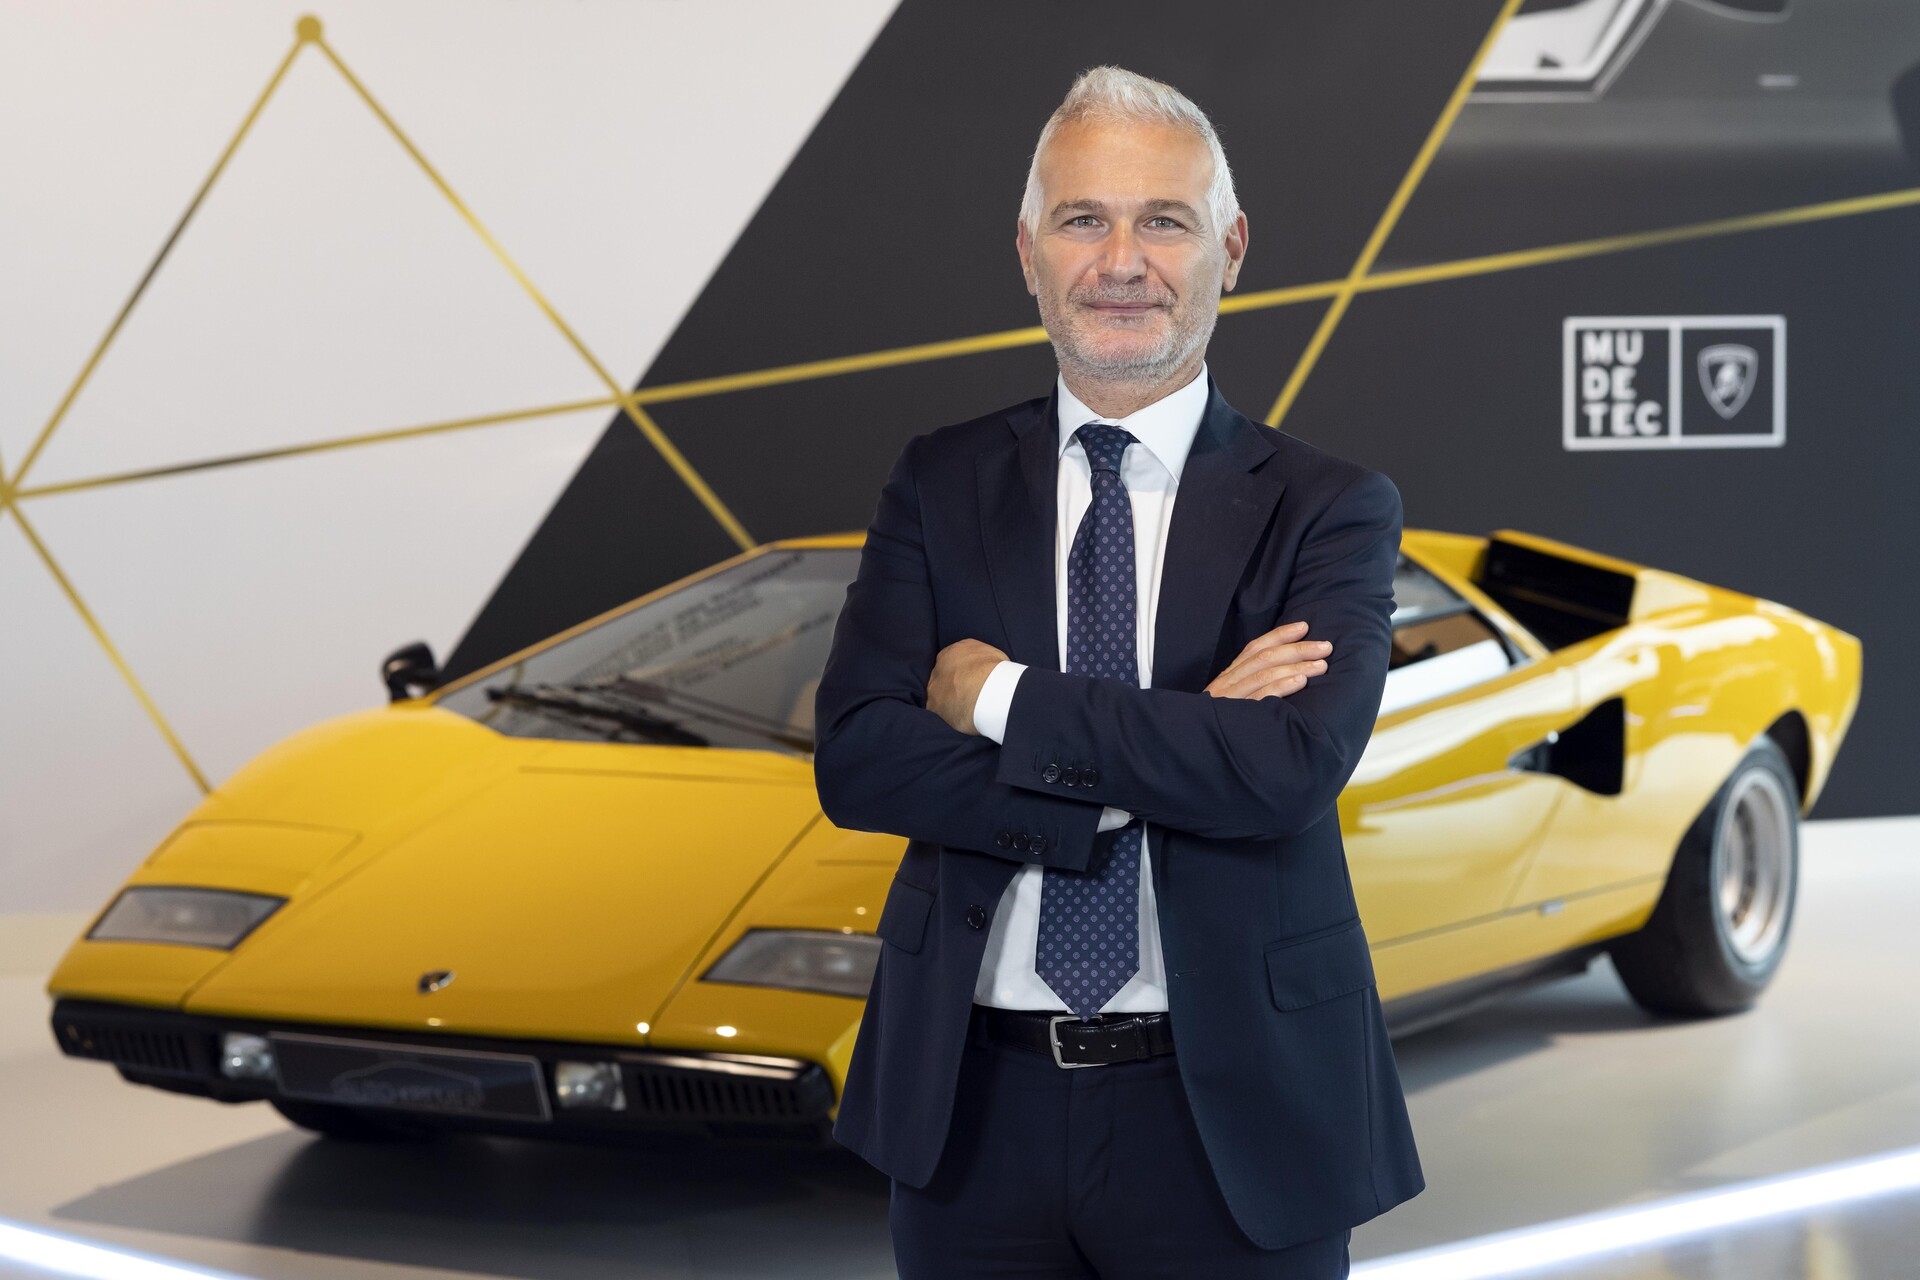 Lanzador: Ο Christian Mastro είναι Διευθυντής Μάρκετινγκ της Automobili Lamborghini